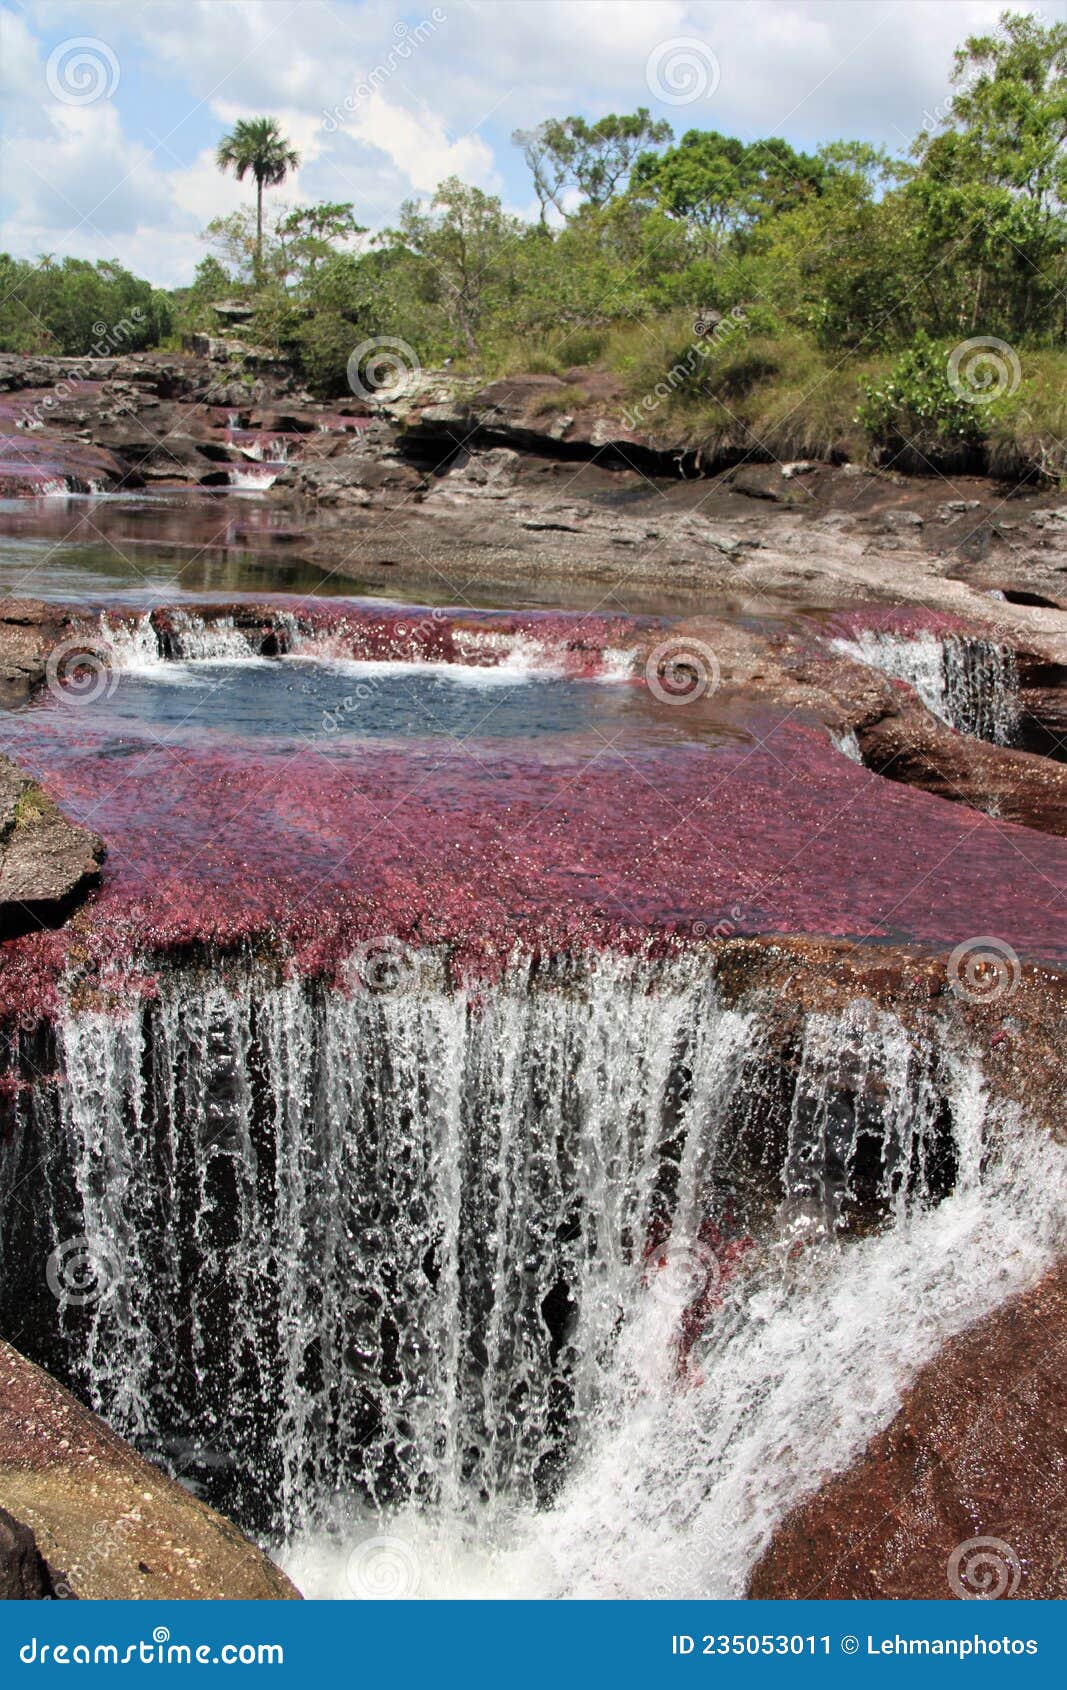 cano cristales pink waterfall jungle